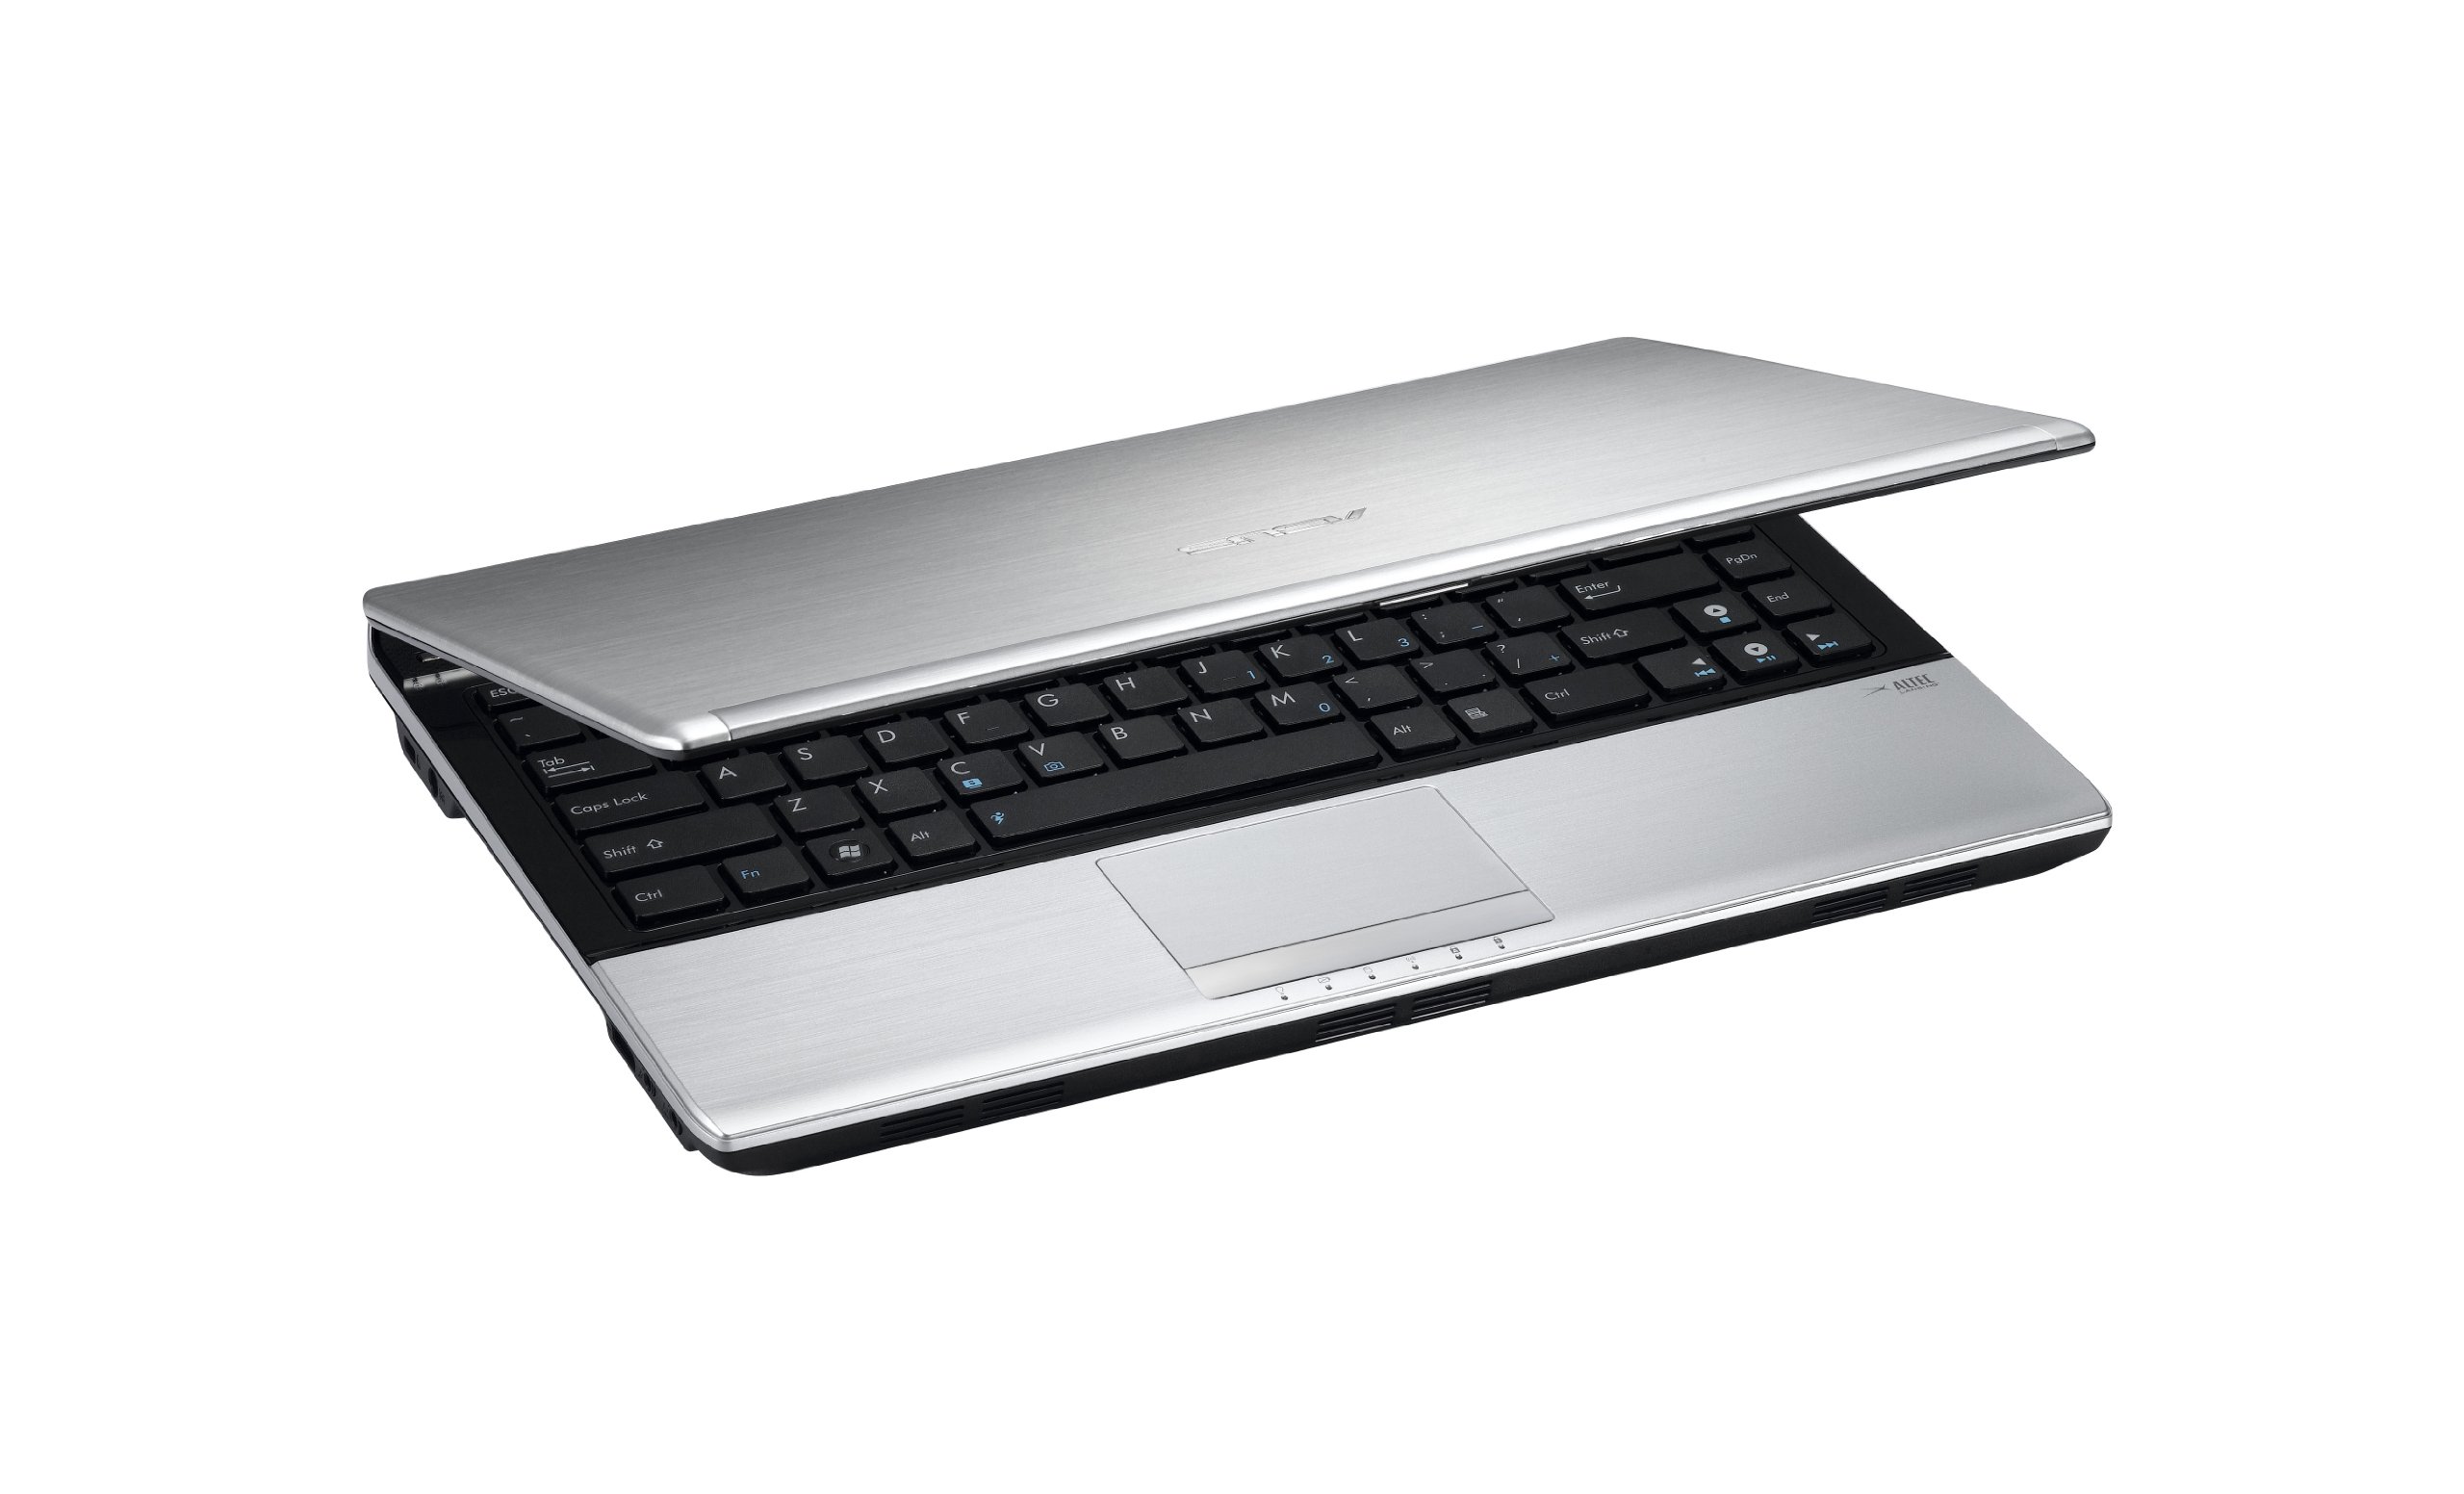 Asus U31JG-A1 13.3-Inch Laptop (Silver)